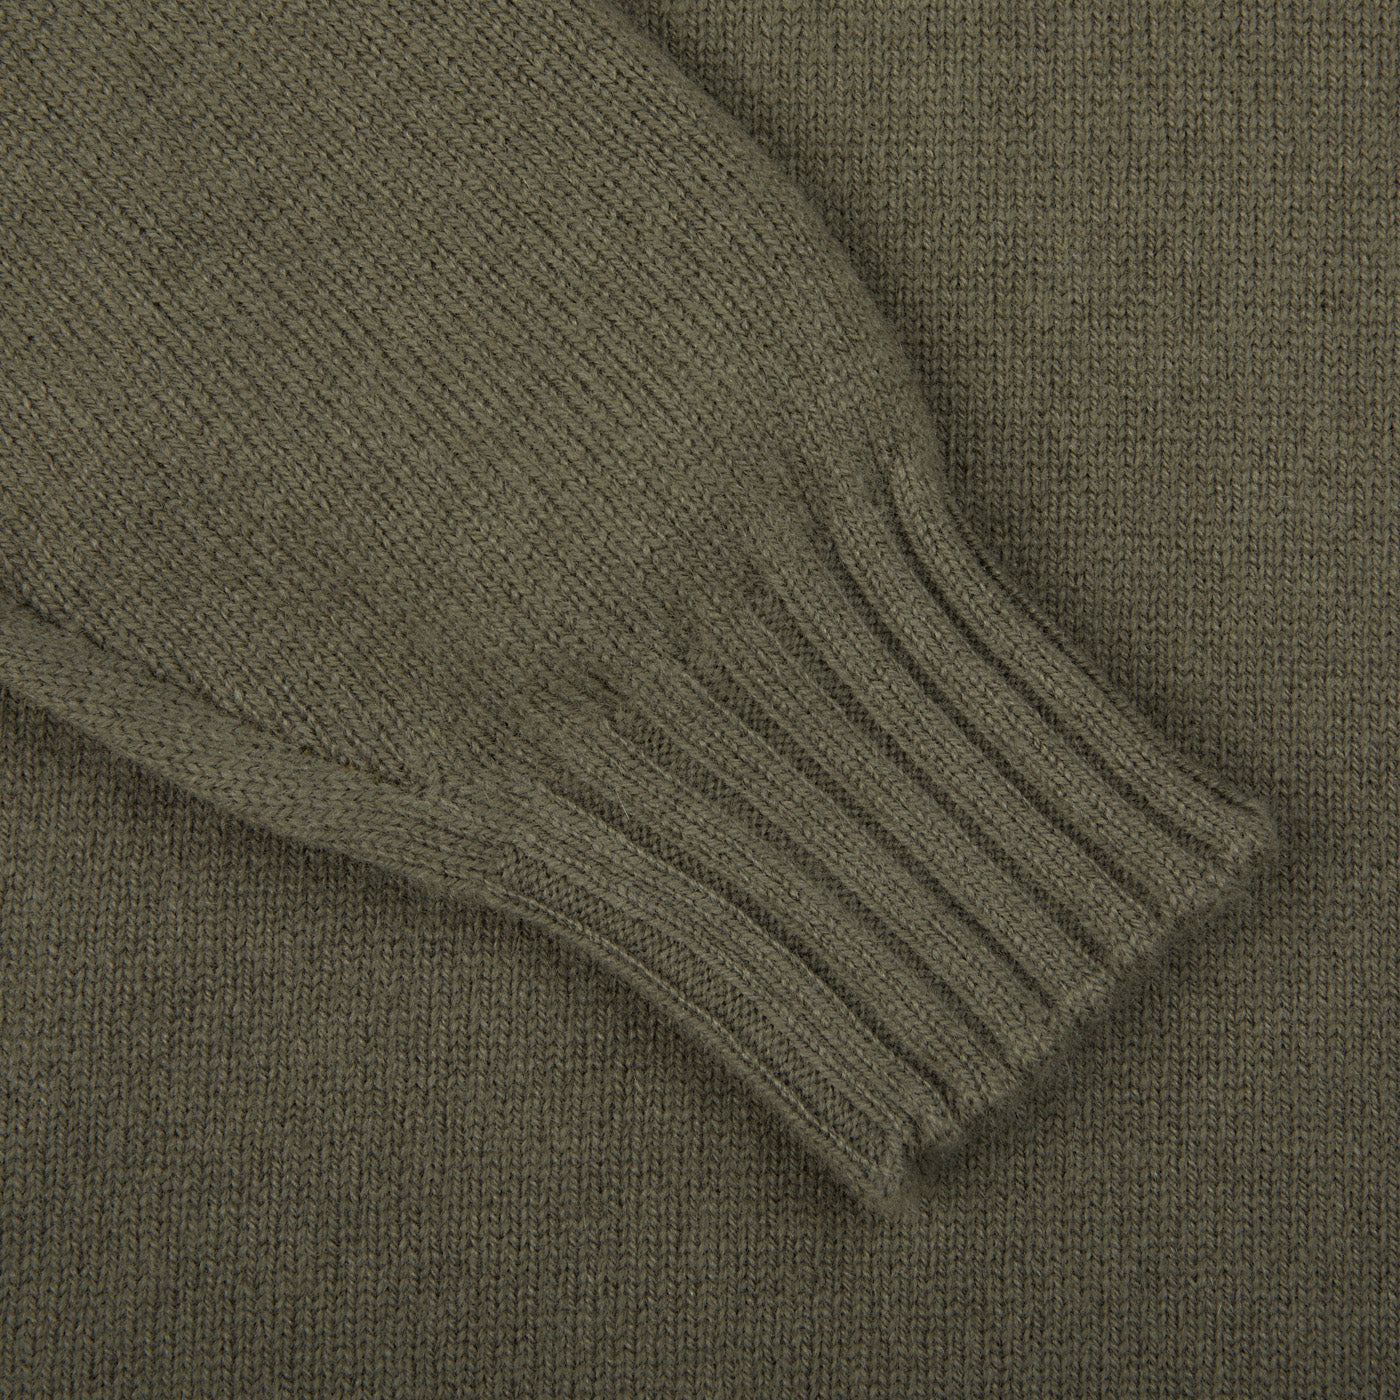 Filippo De Laurentiis Loden Green Wool Cashmere Crewneck Sweater Cuff